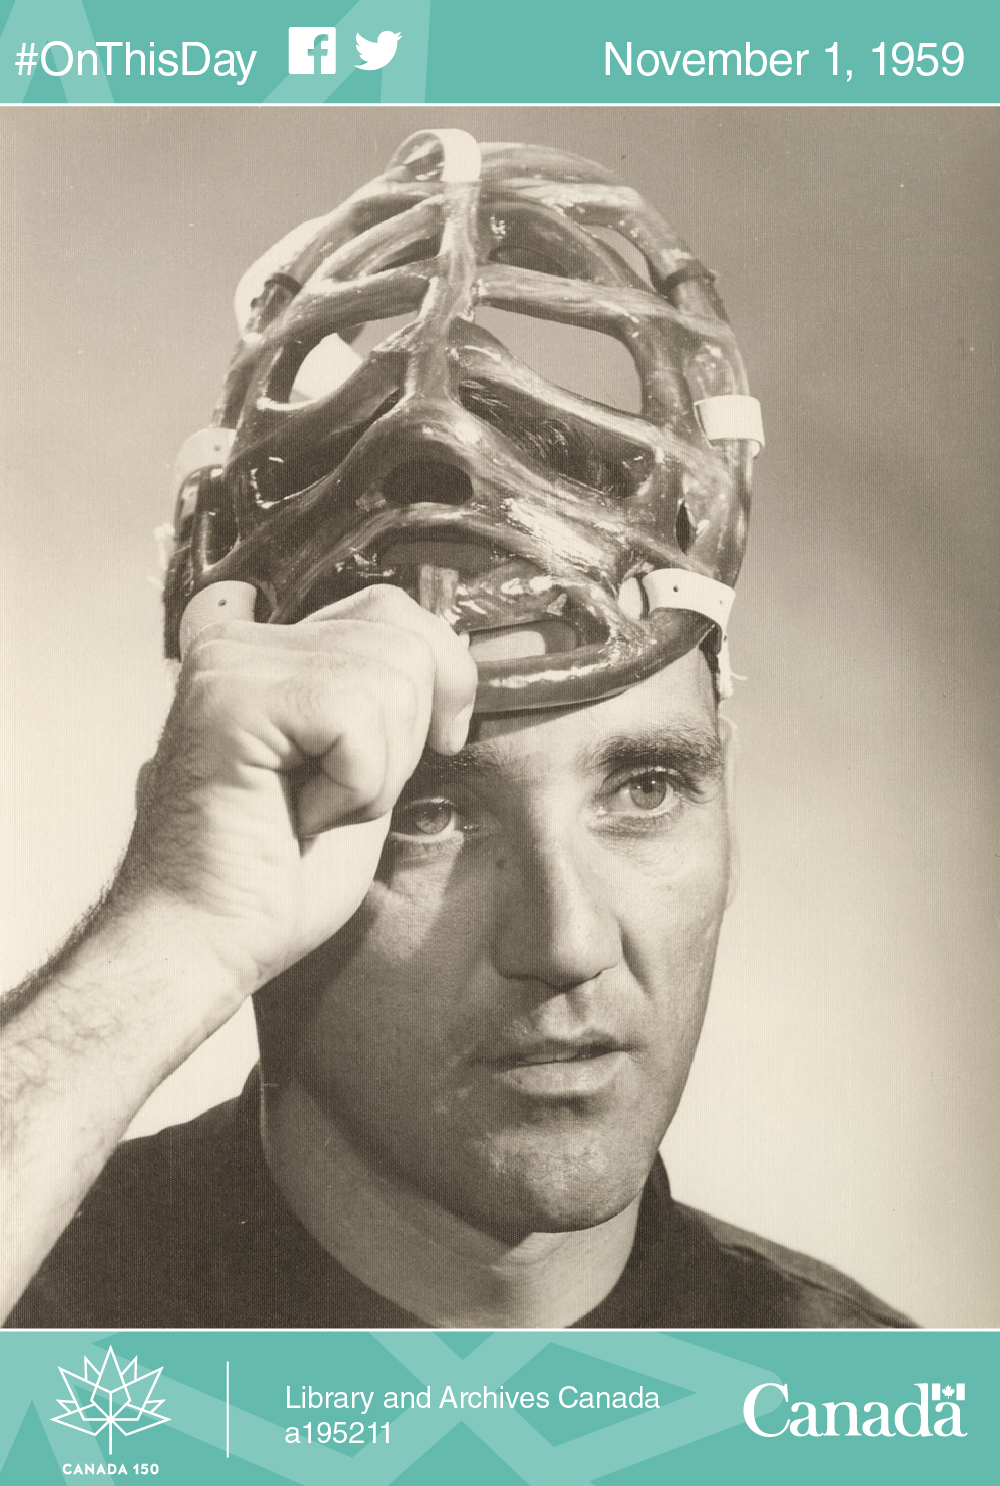 Photo of Jacques Plante raising his goalie mask, 1960